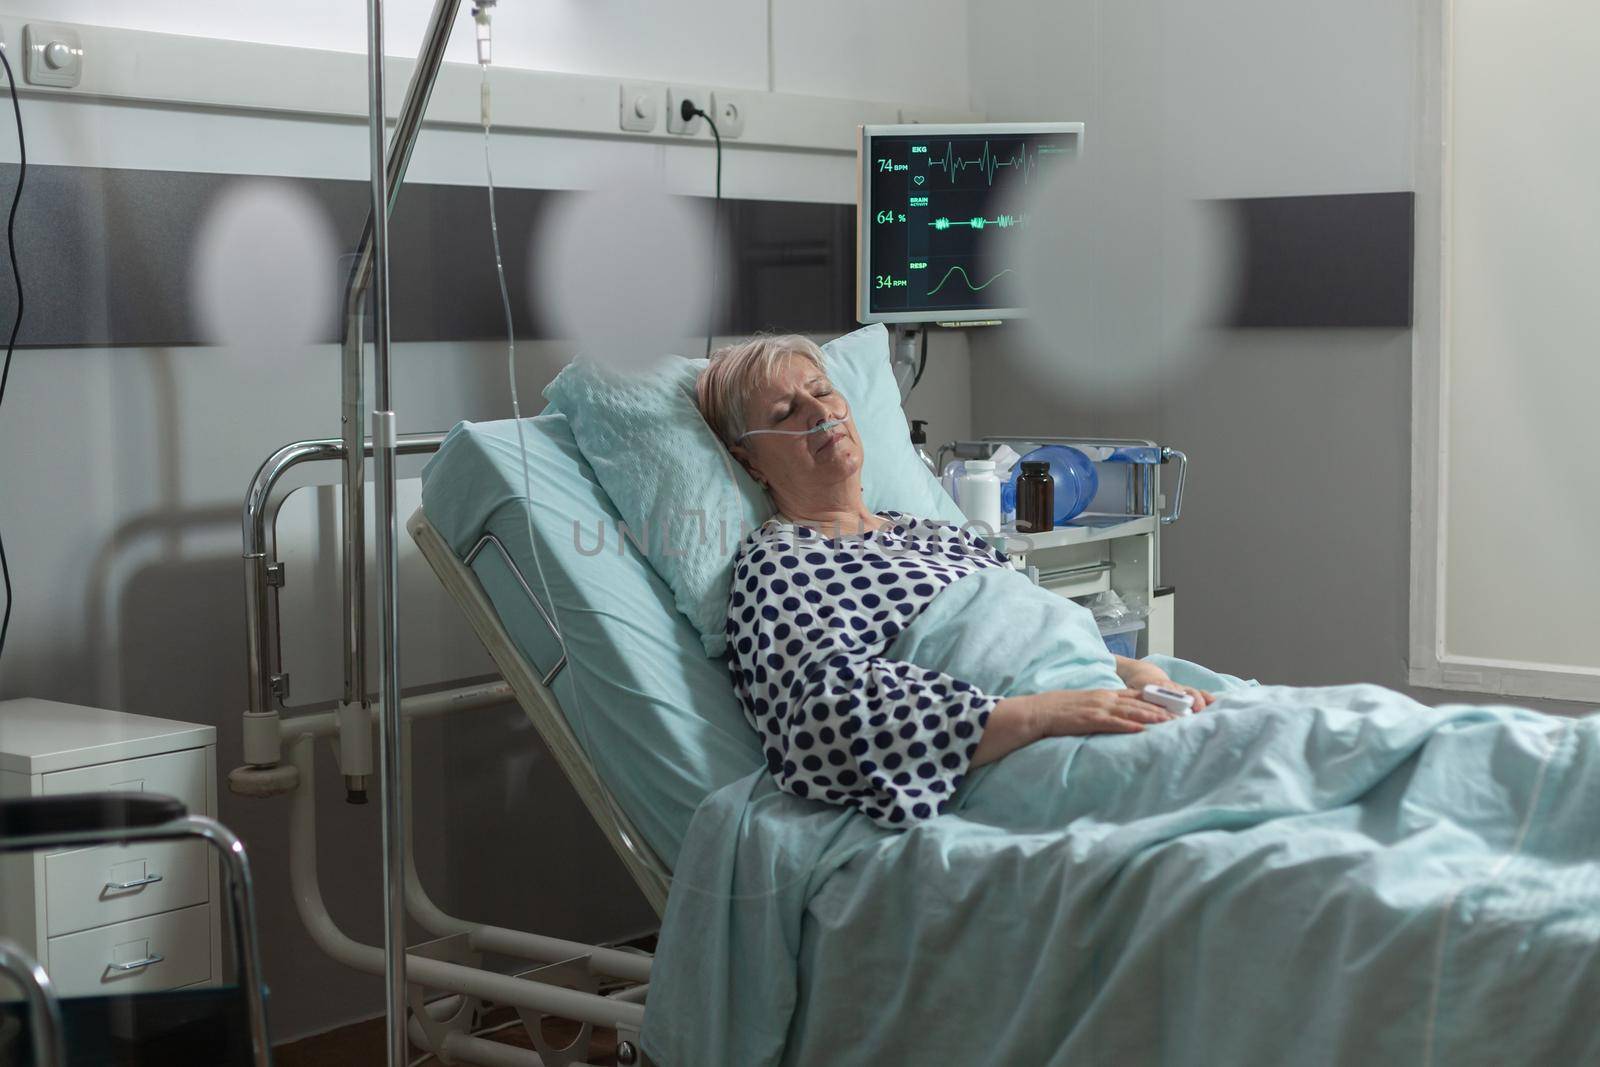 Senior woman patient in hospital room getting medicine through intravenous line by DCStudio